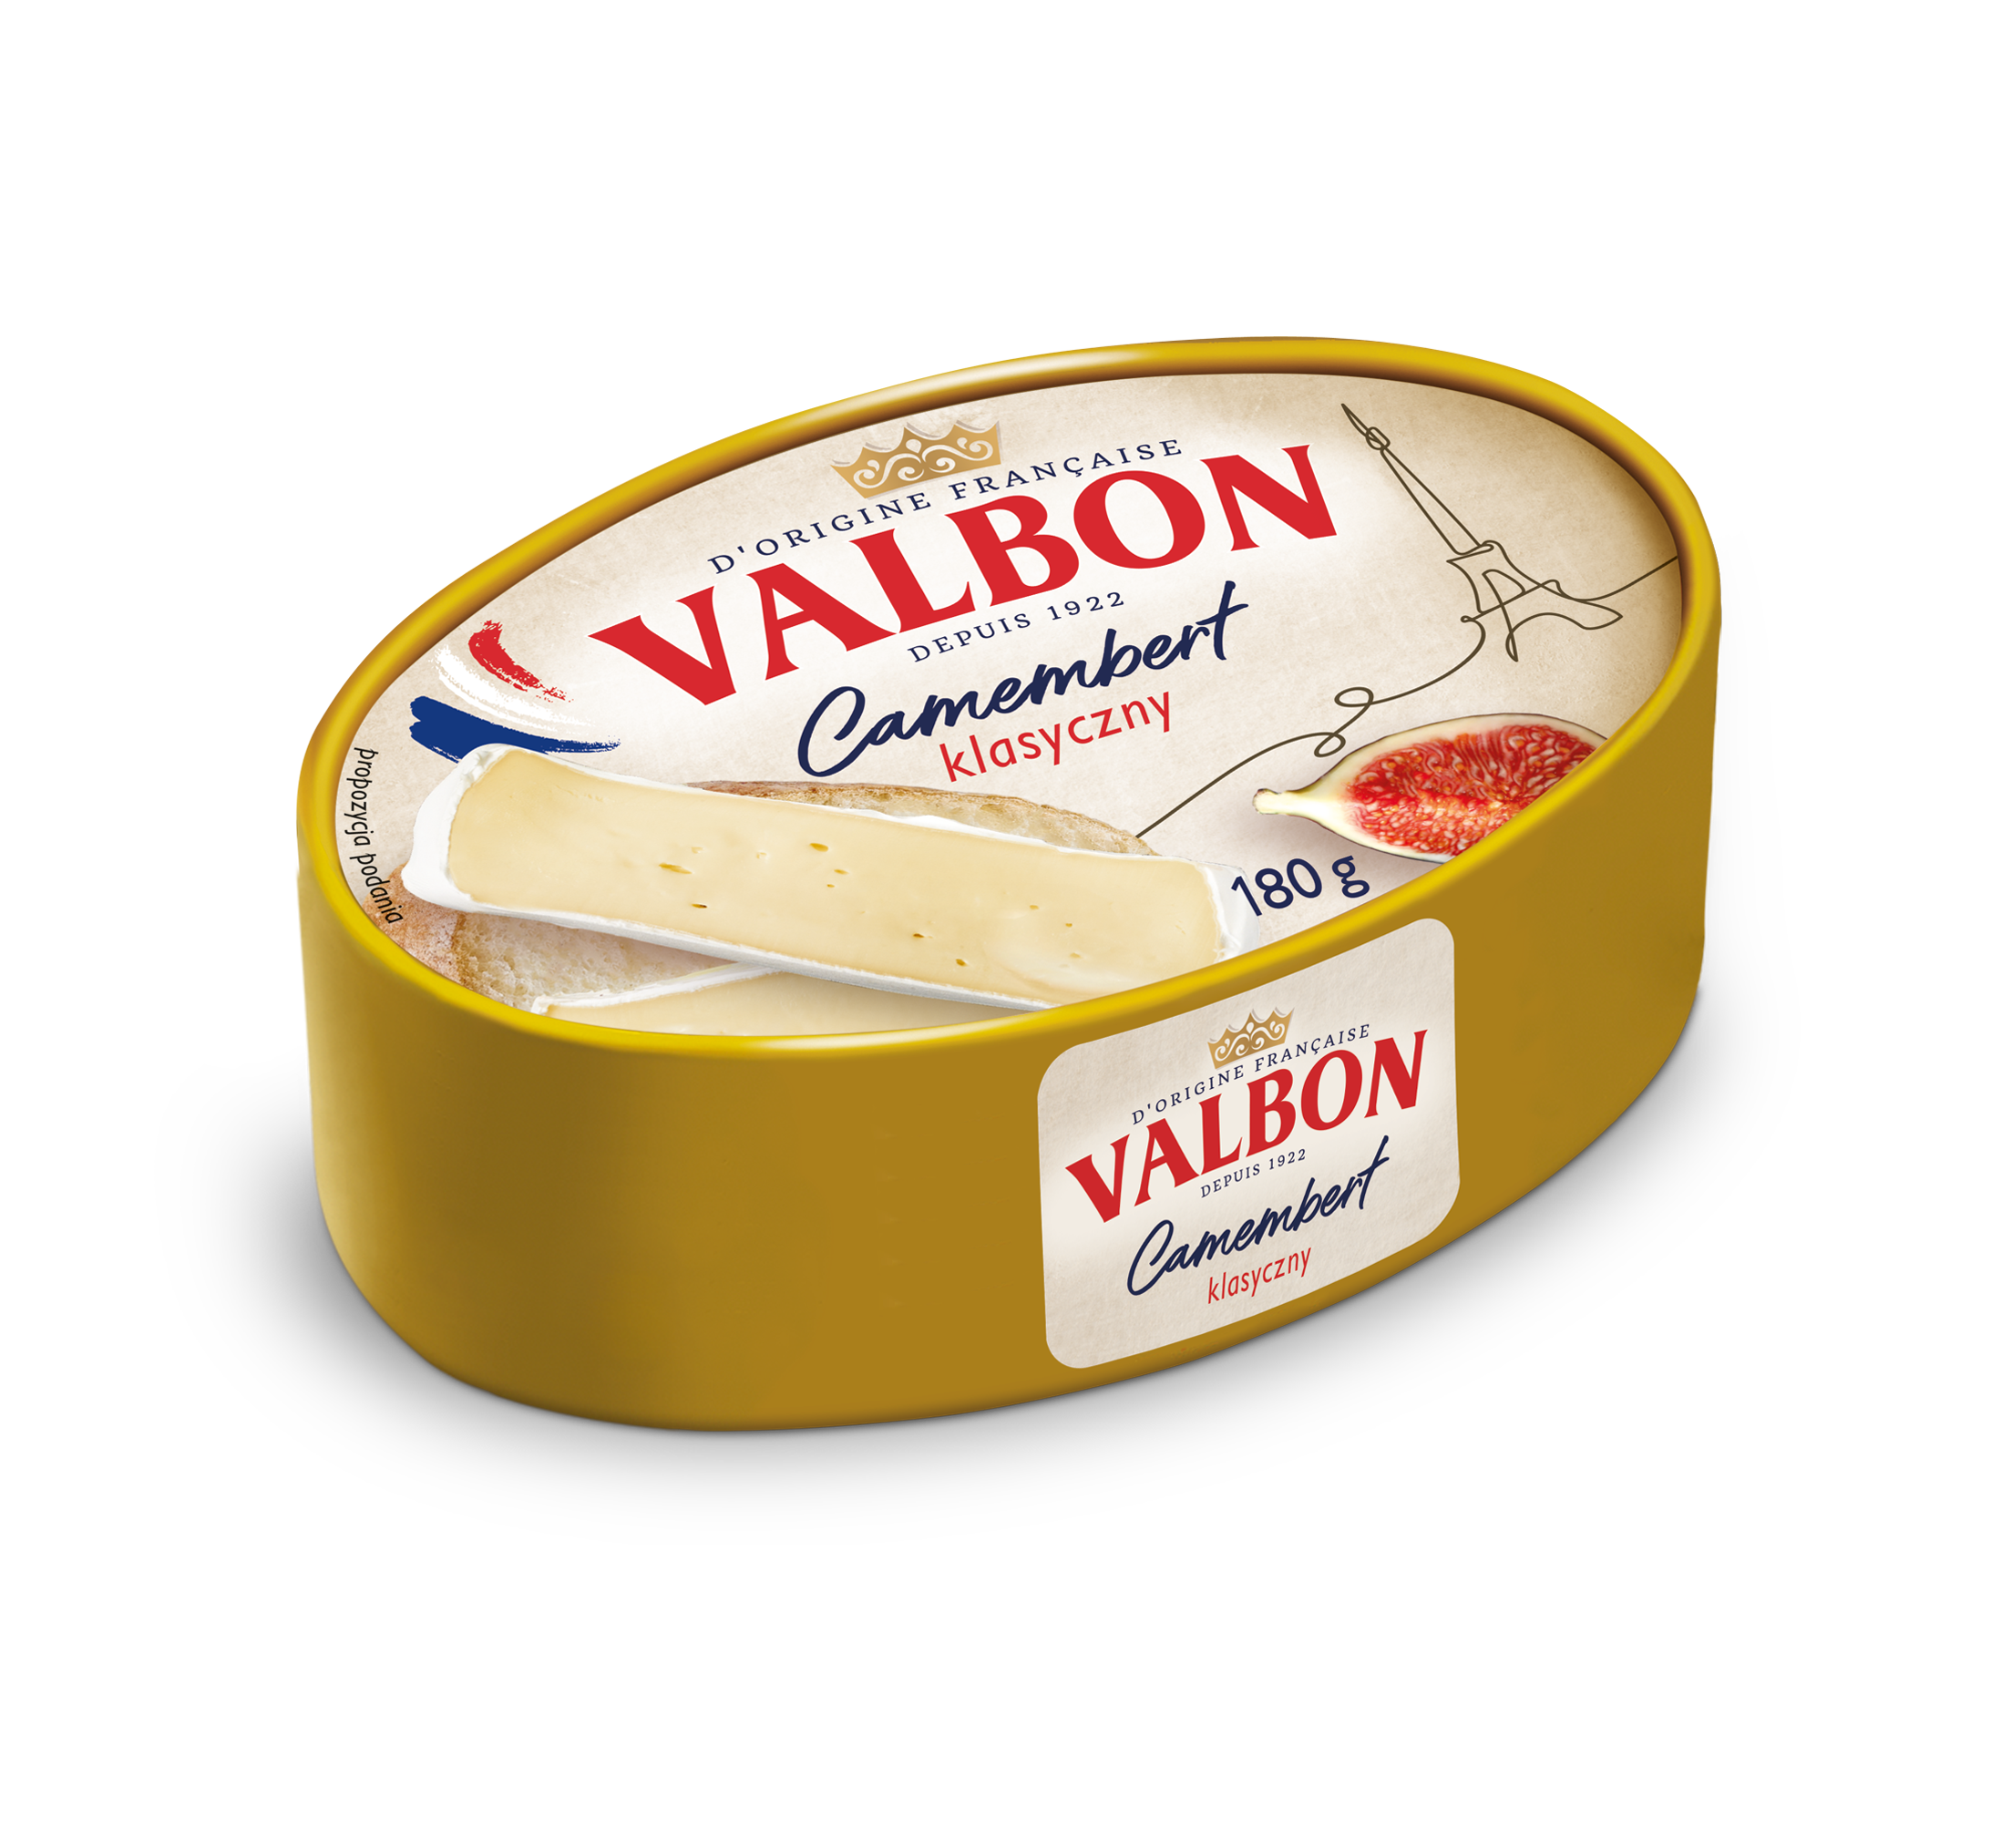 Ser Valbon Camembert klasyczny